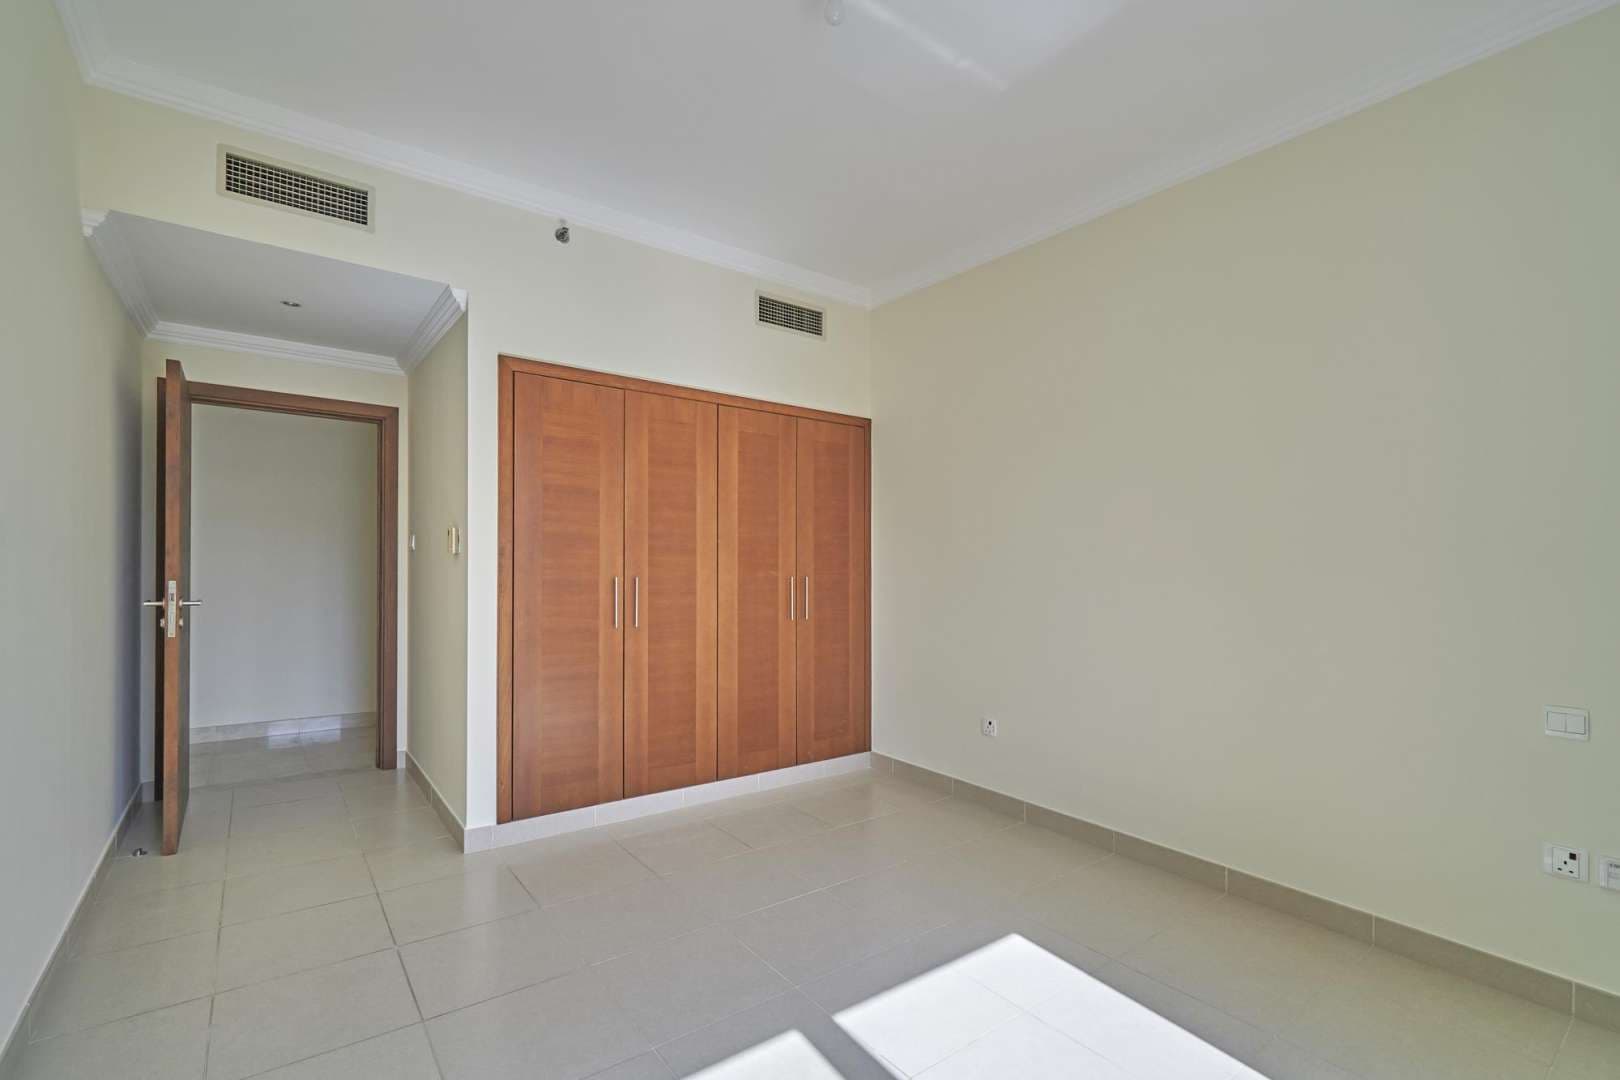 3 Bedroom Apartment For Rent Marina Quay West Lp05748 24160f3ab38e7000.jpg